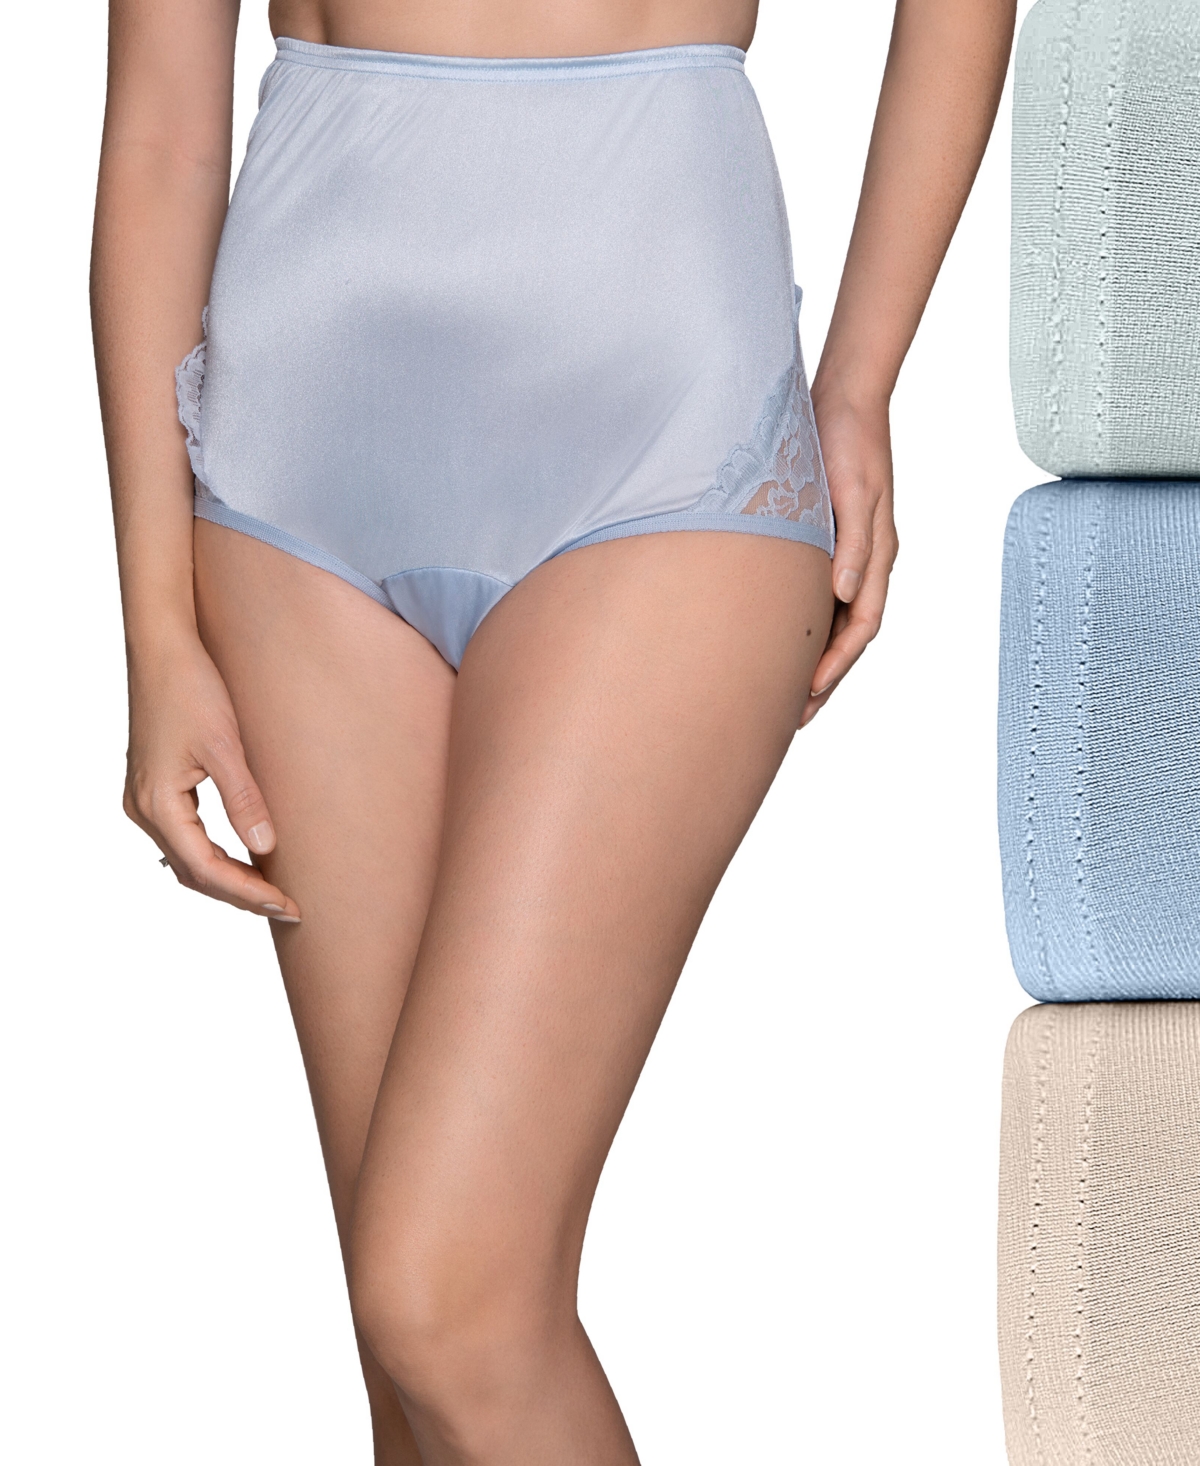 Women's 3-Pk. Lace Nouveau Brief Underwear 13011 - Morning Rain, Fawn, White